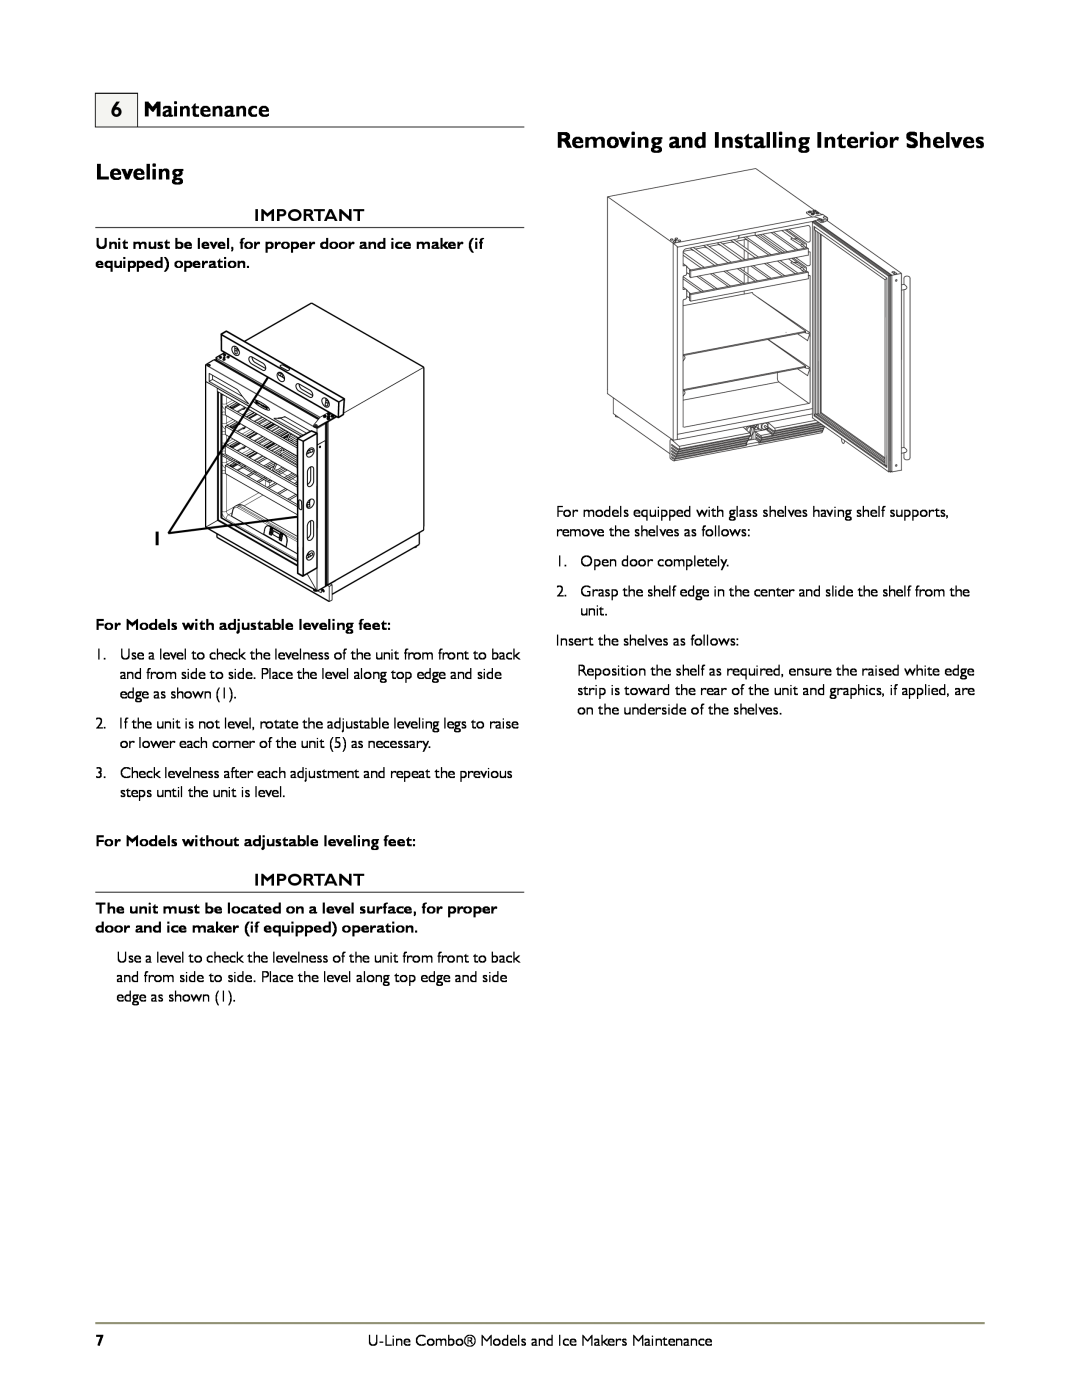 U-Line CO1175, SP18 manual Leveling, Removing and Installing Interior Shelves, Maintenance 